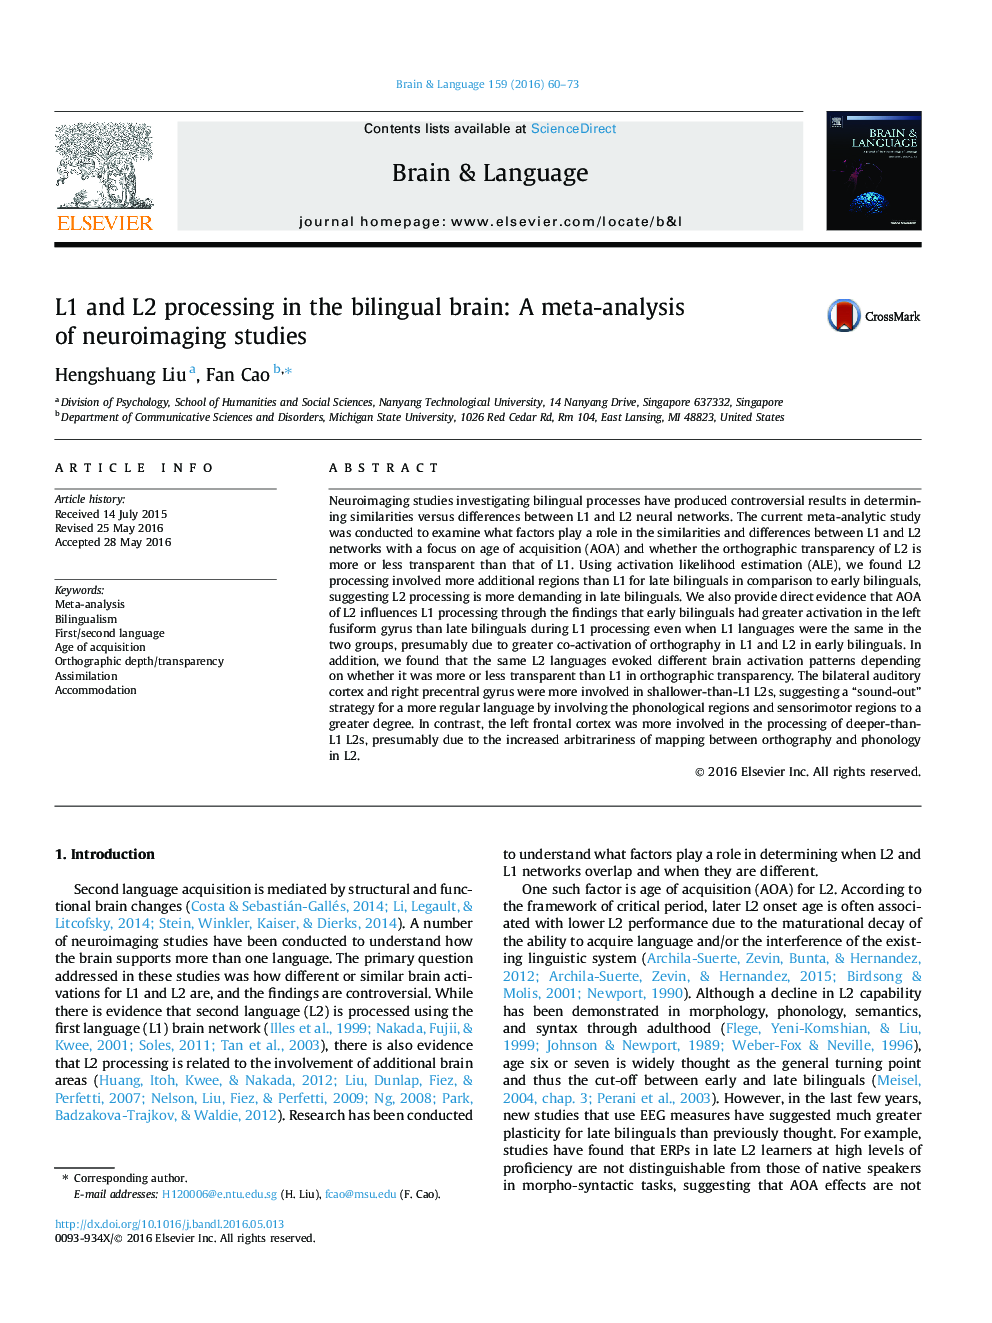 L1 and L2 processing in the bilingual brain: A meta-analysis of neuroimaging studies